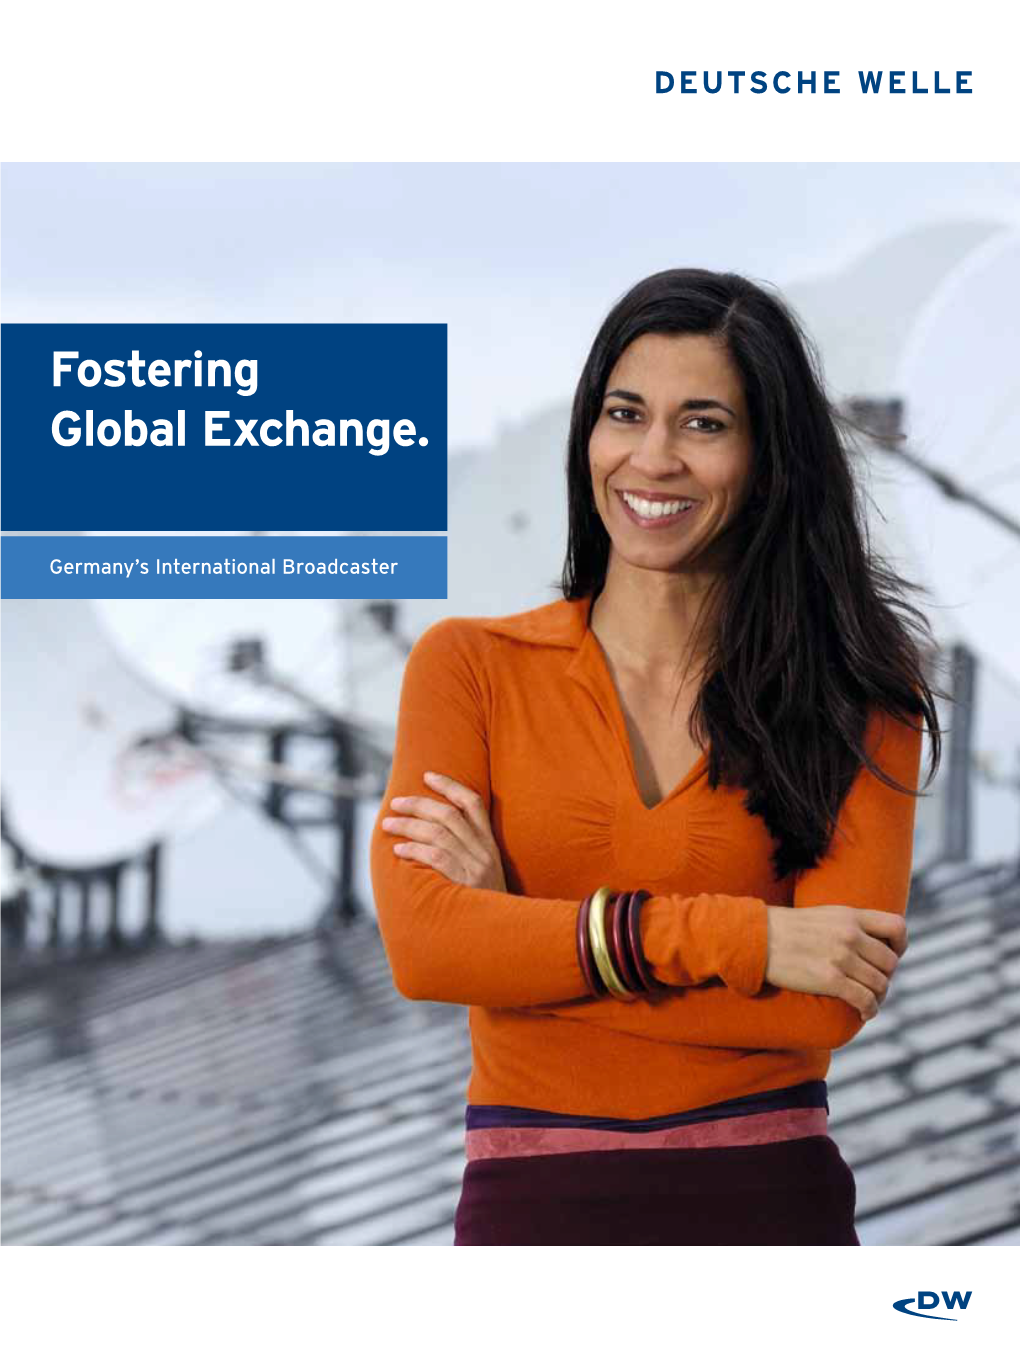 Fostering Global Exchange